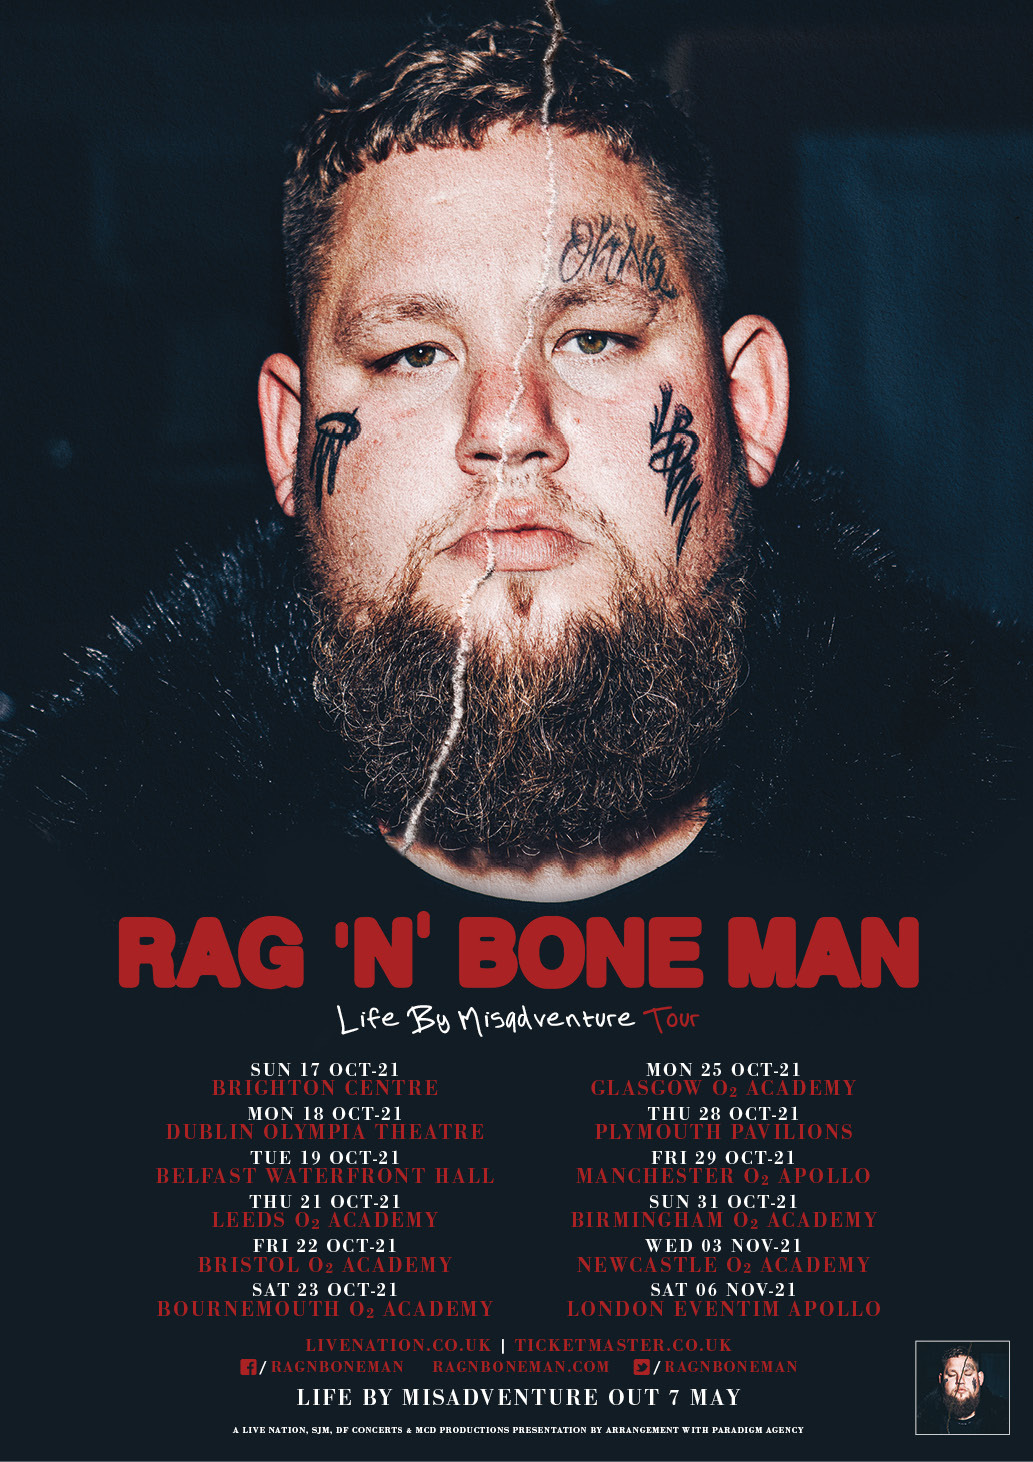 Rag N Bone man Life By Misadventure tour dates